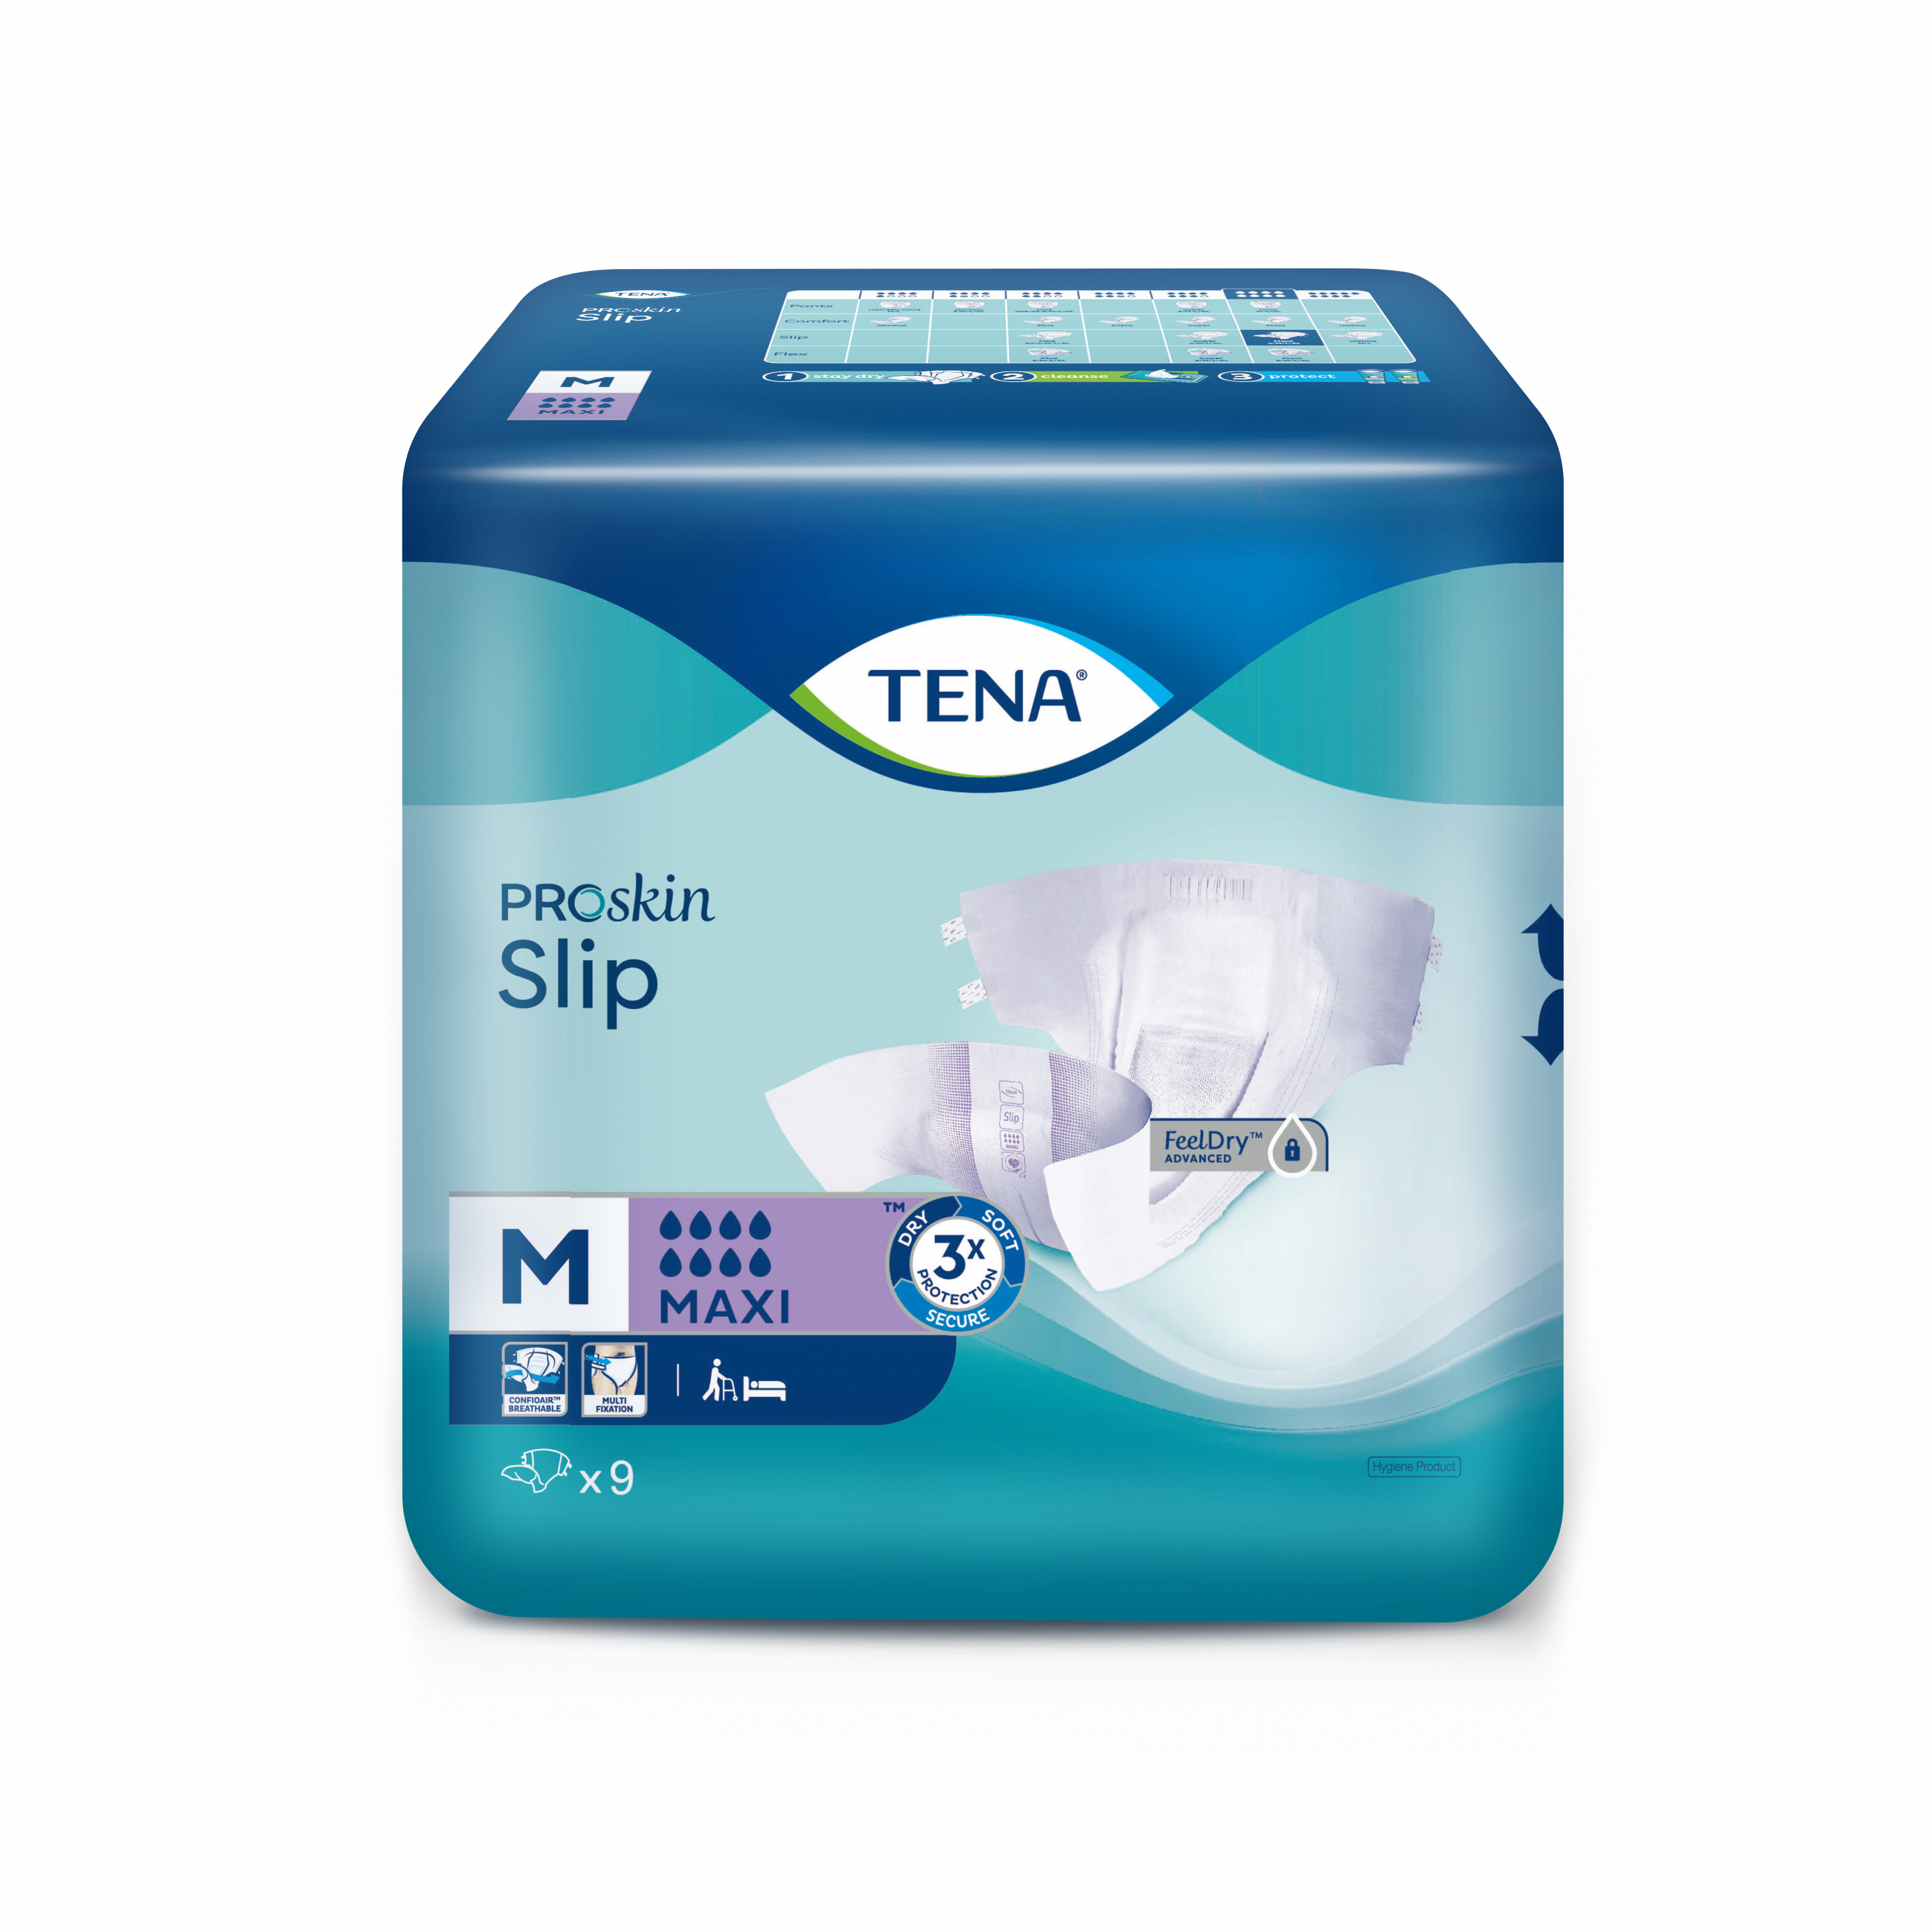 TENA PROskin Slip Maxi Medium image 0